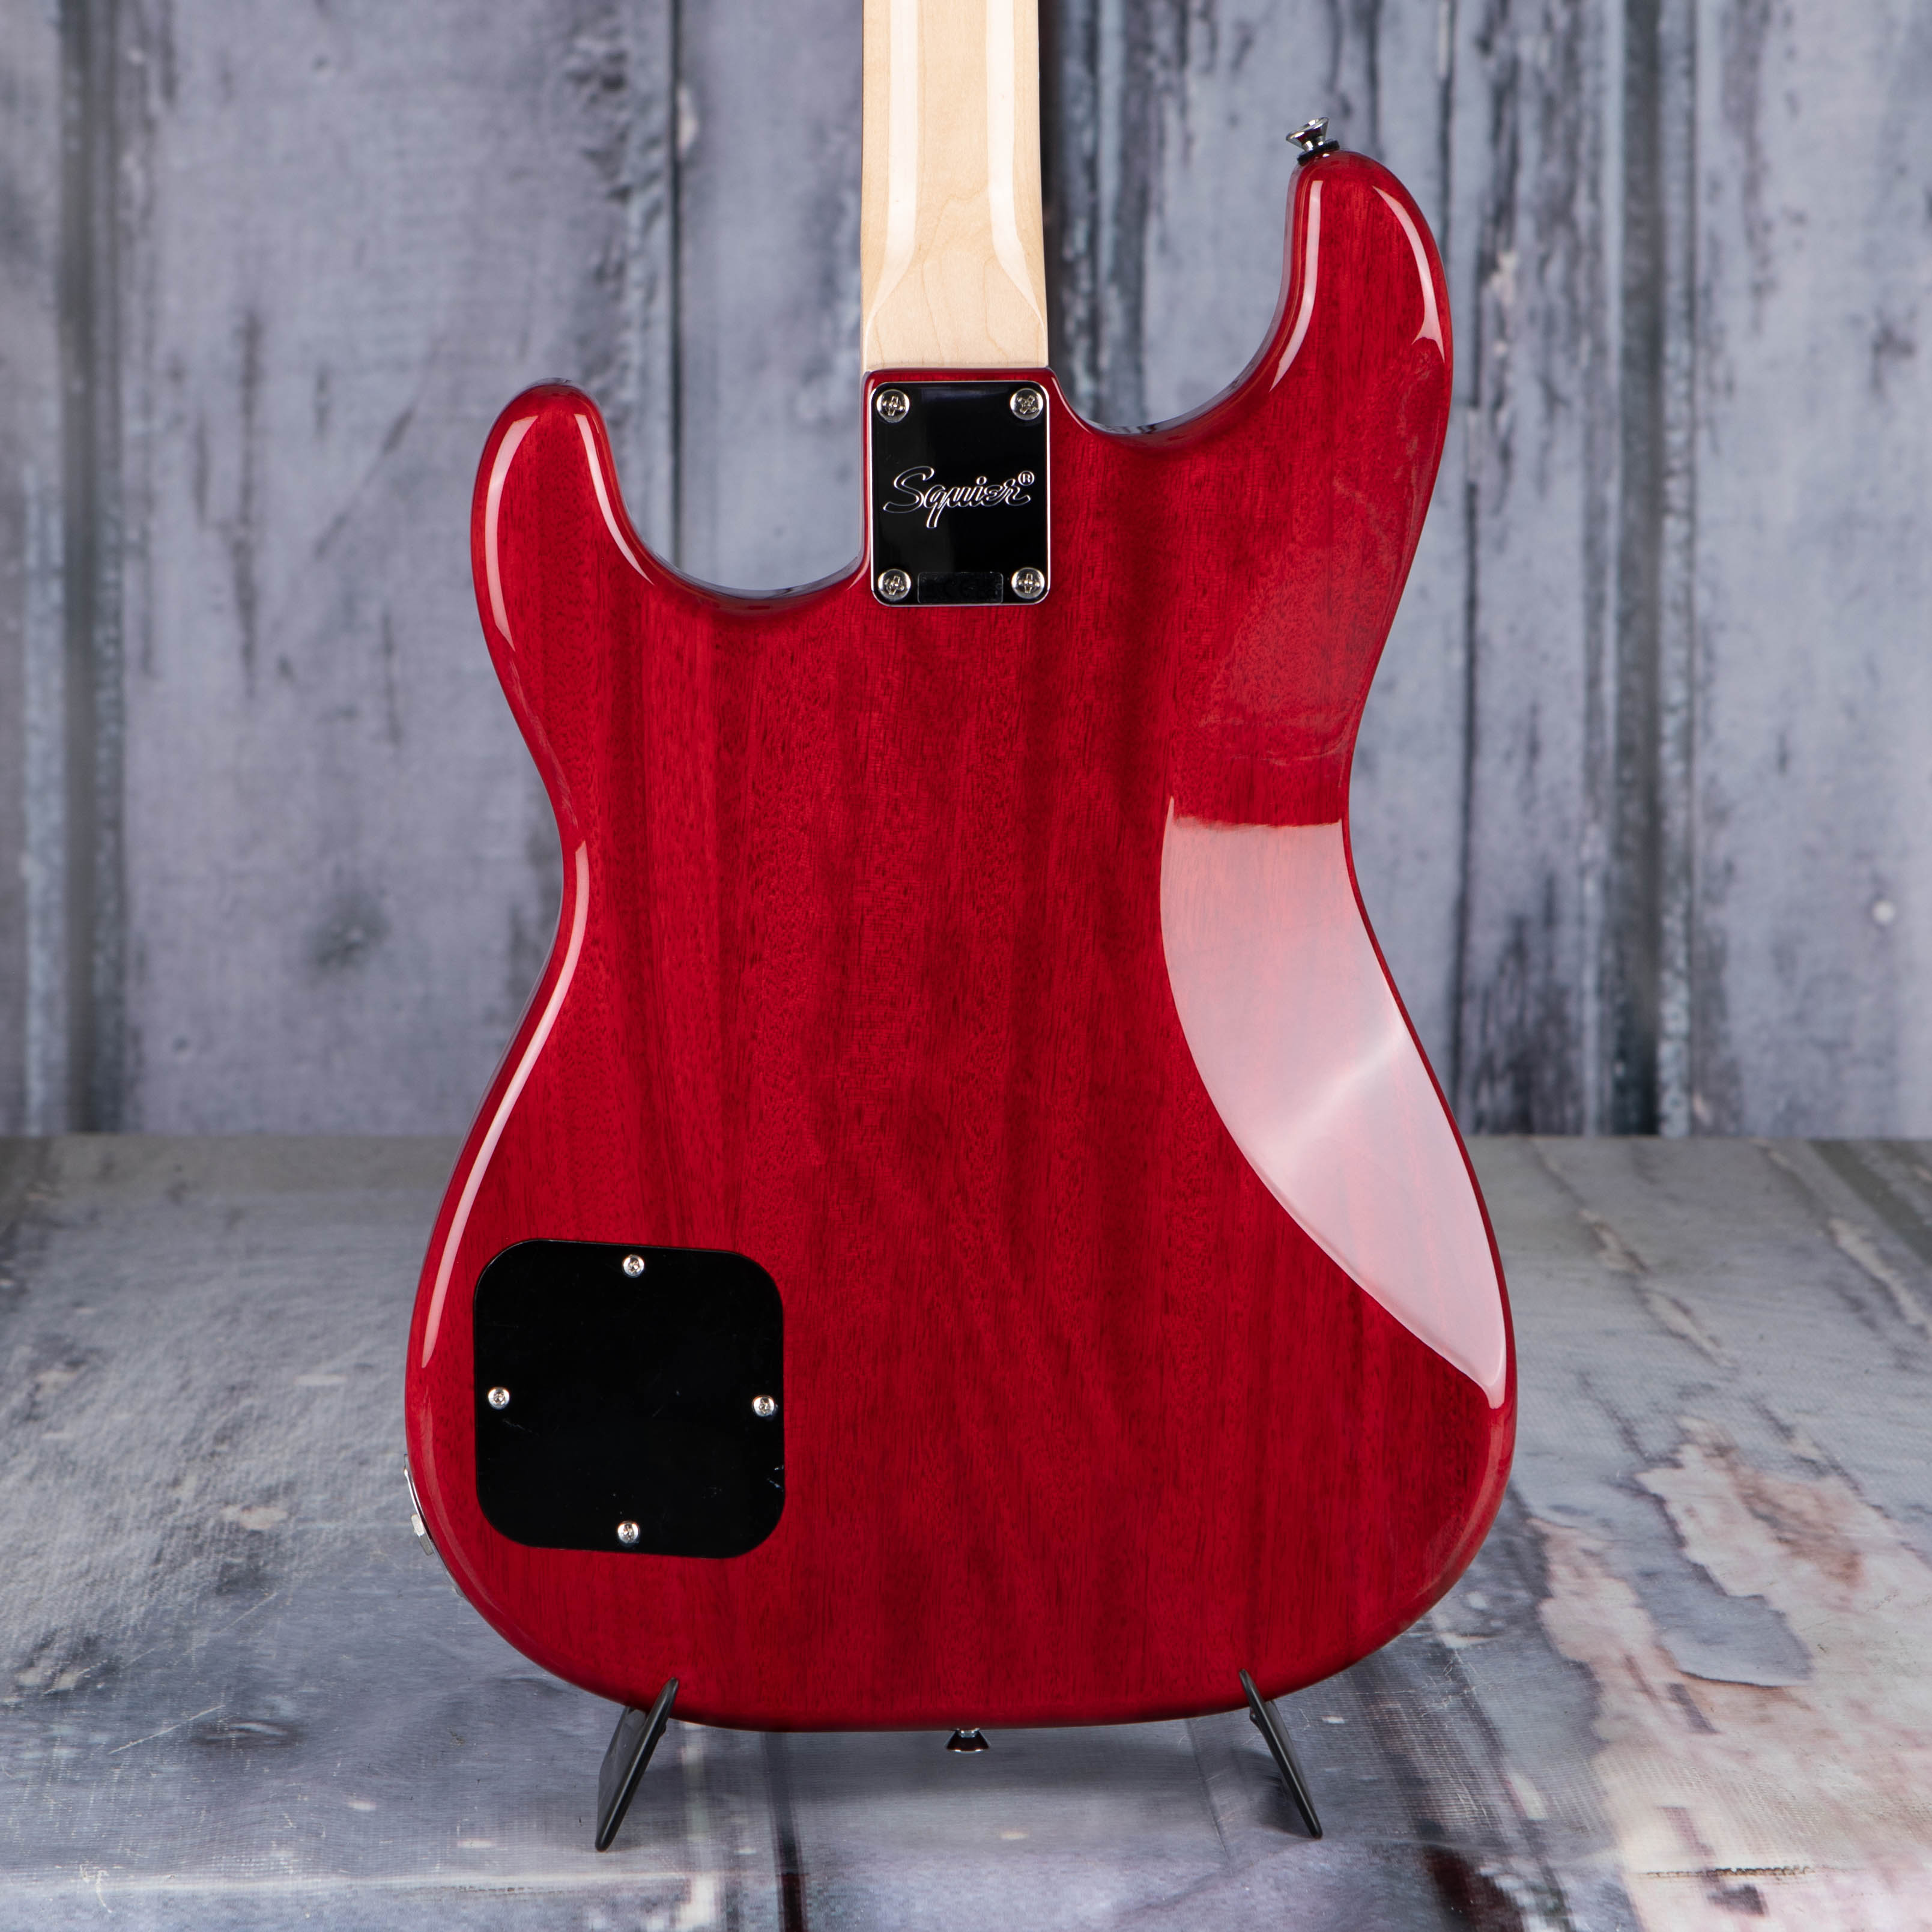 Squier Paranormal Strat-O-Sonic Electric Guitar, Crimson Red Transparent, back closeup